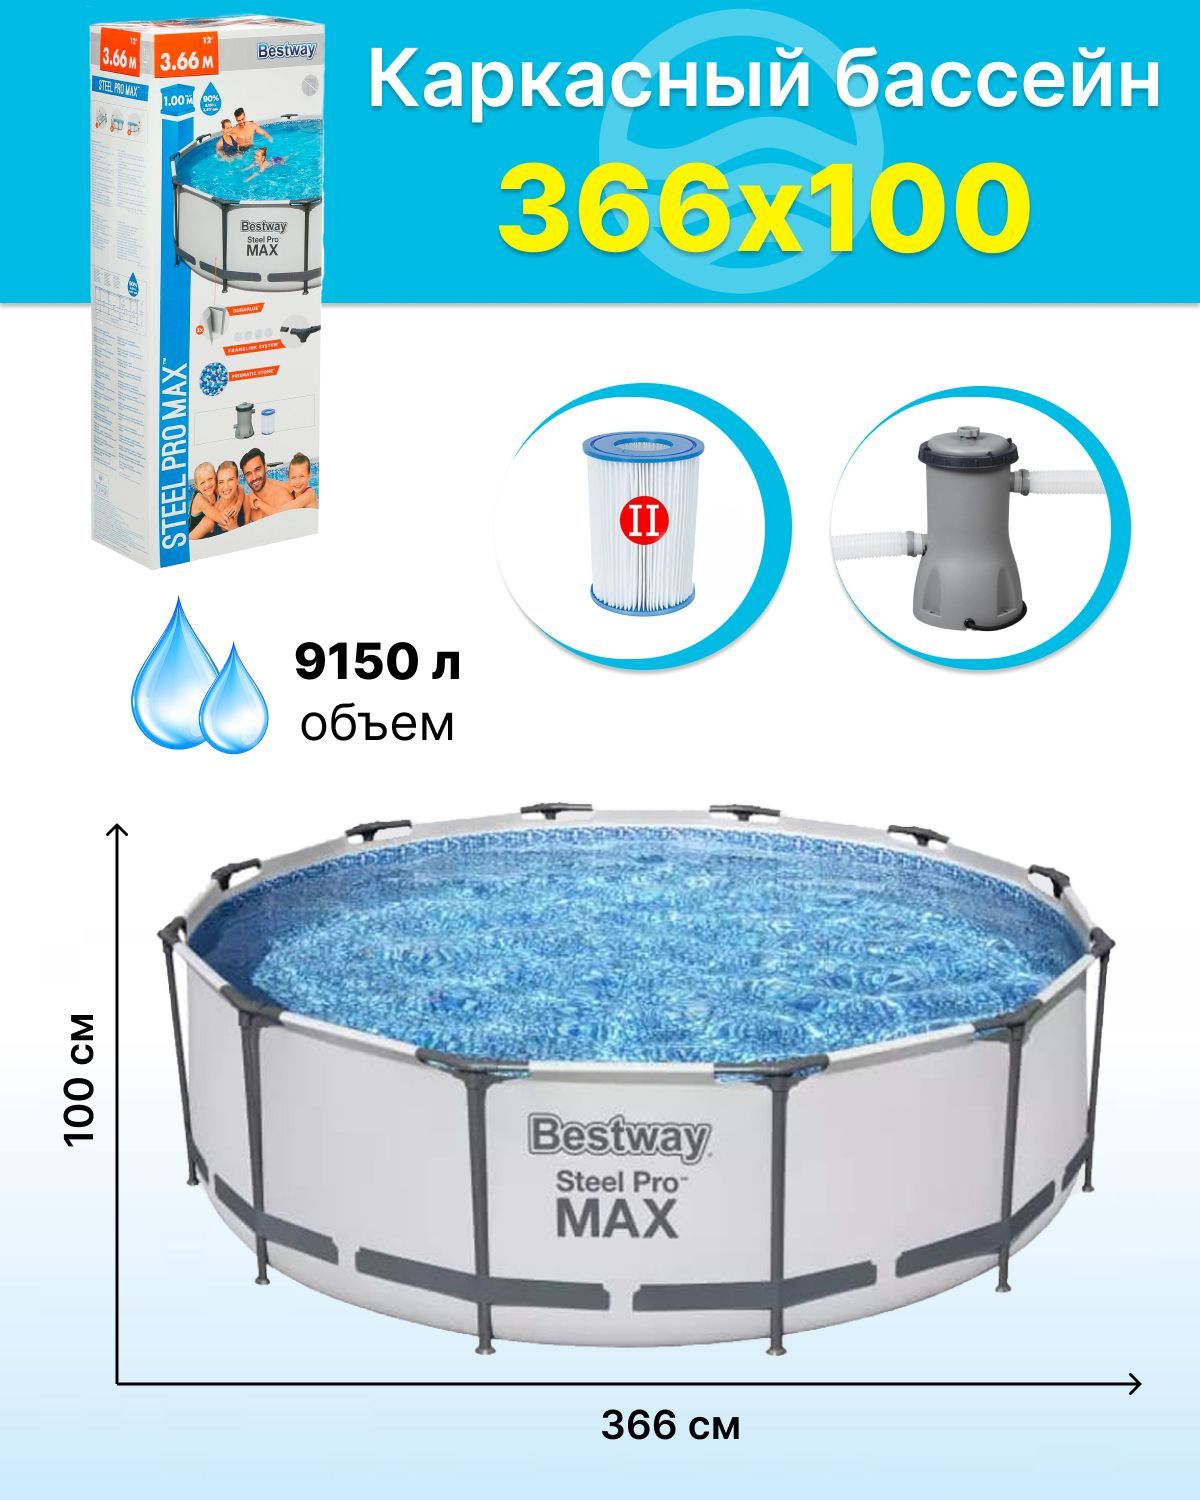 Bestway steel pro max 366. Бассейн каркасный Steel Pro Max 366х100 см, 9150л, 1/1, , шт.